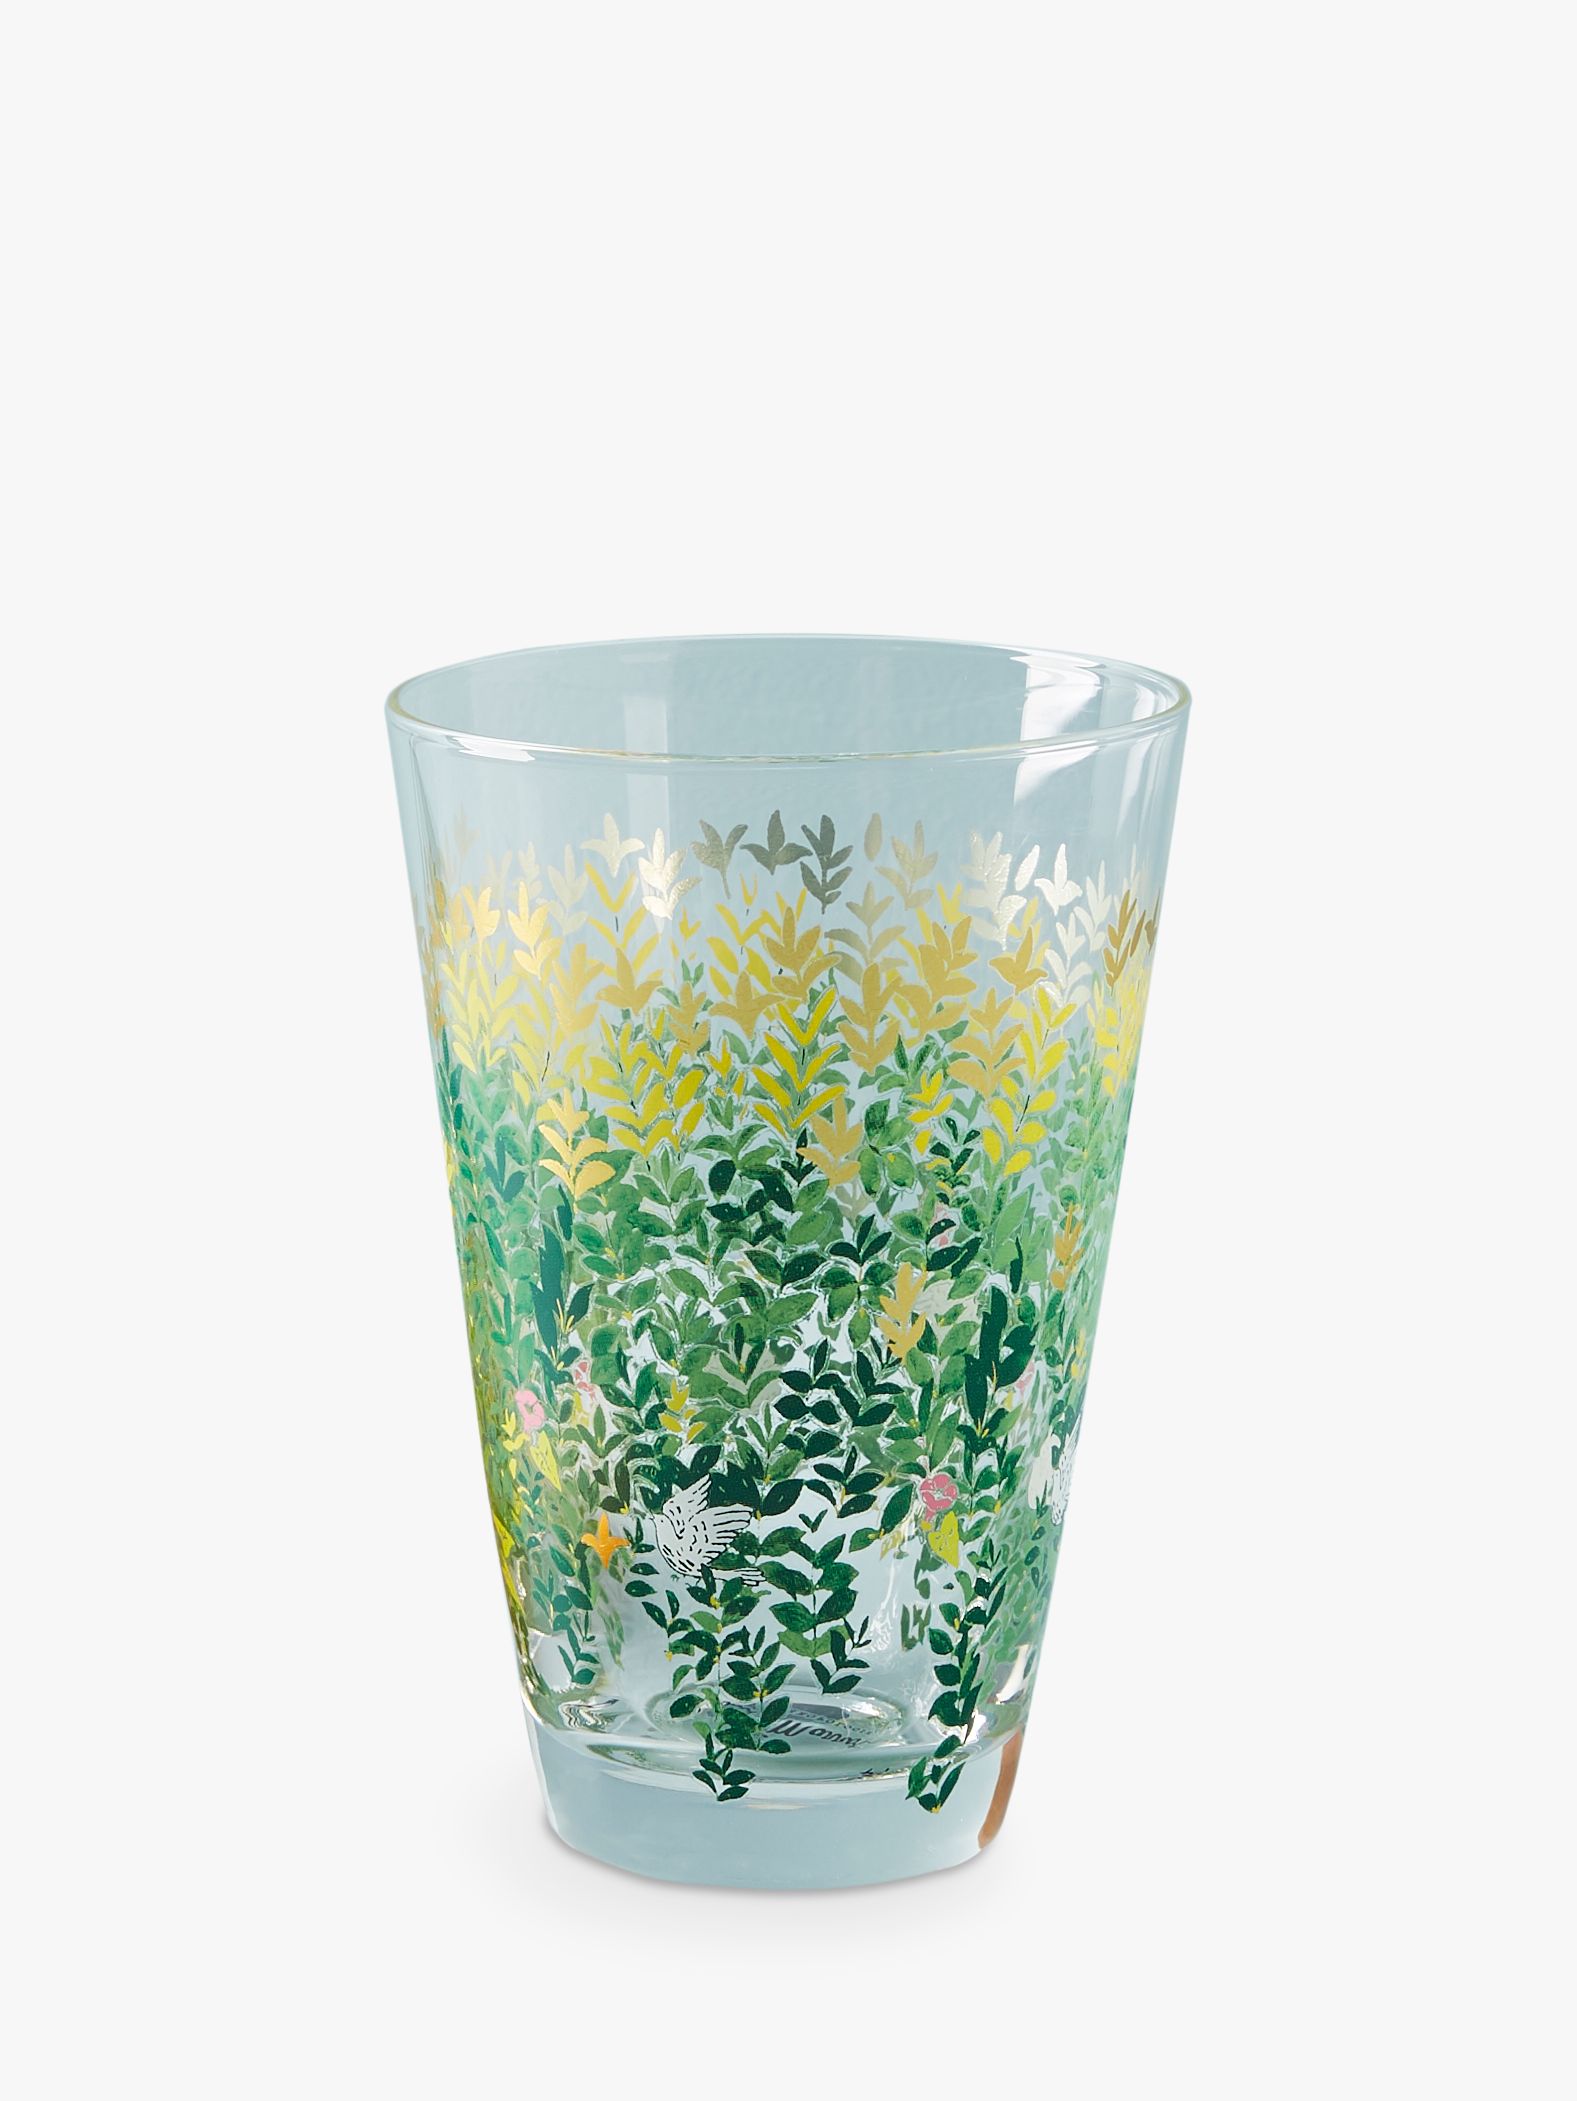 Anthropologie Paule Marrot Leaves Juice Glass, 310ml, Green/Multi at ...